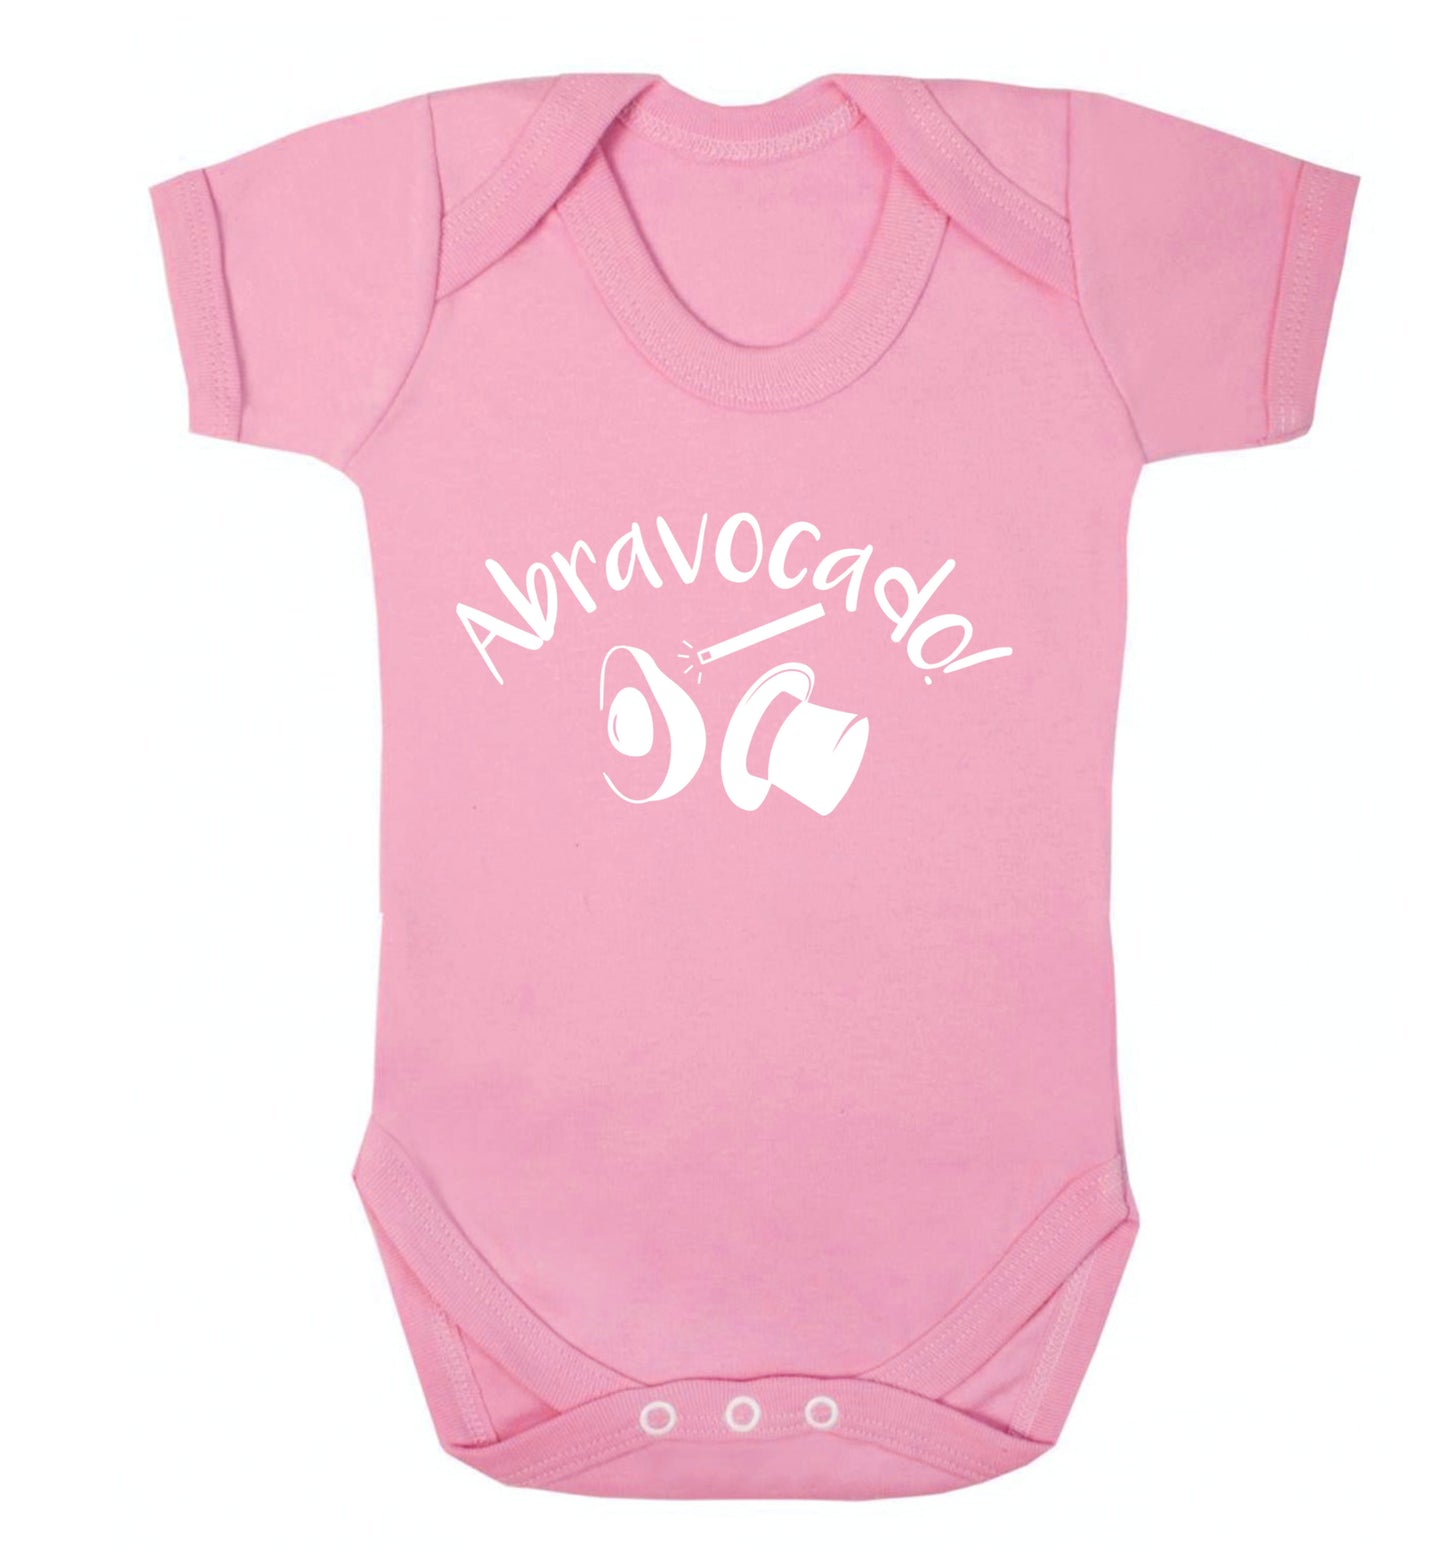 Abravocado Baby Vest pale pink 18-24 months